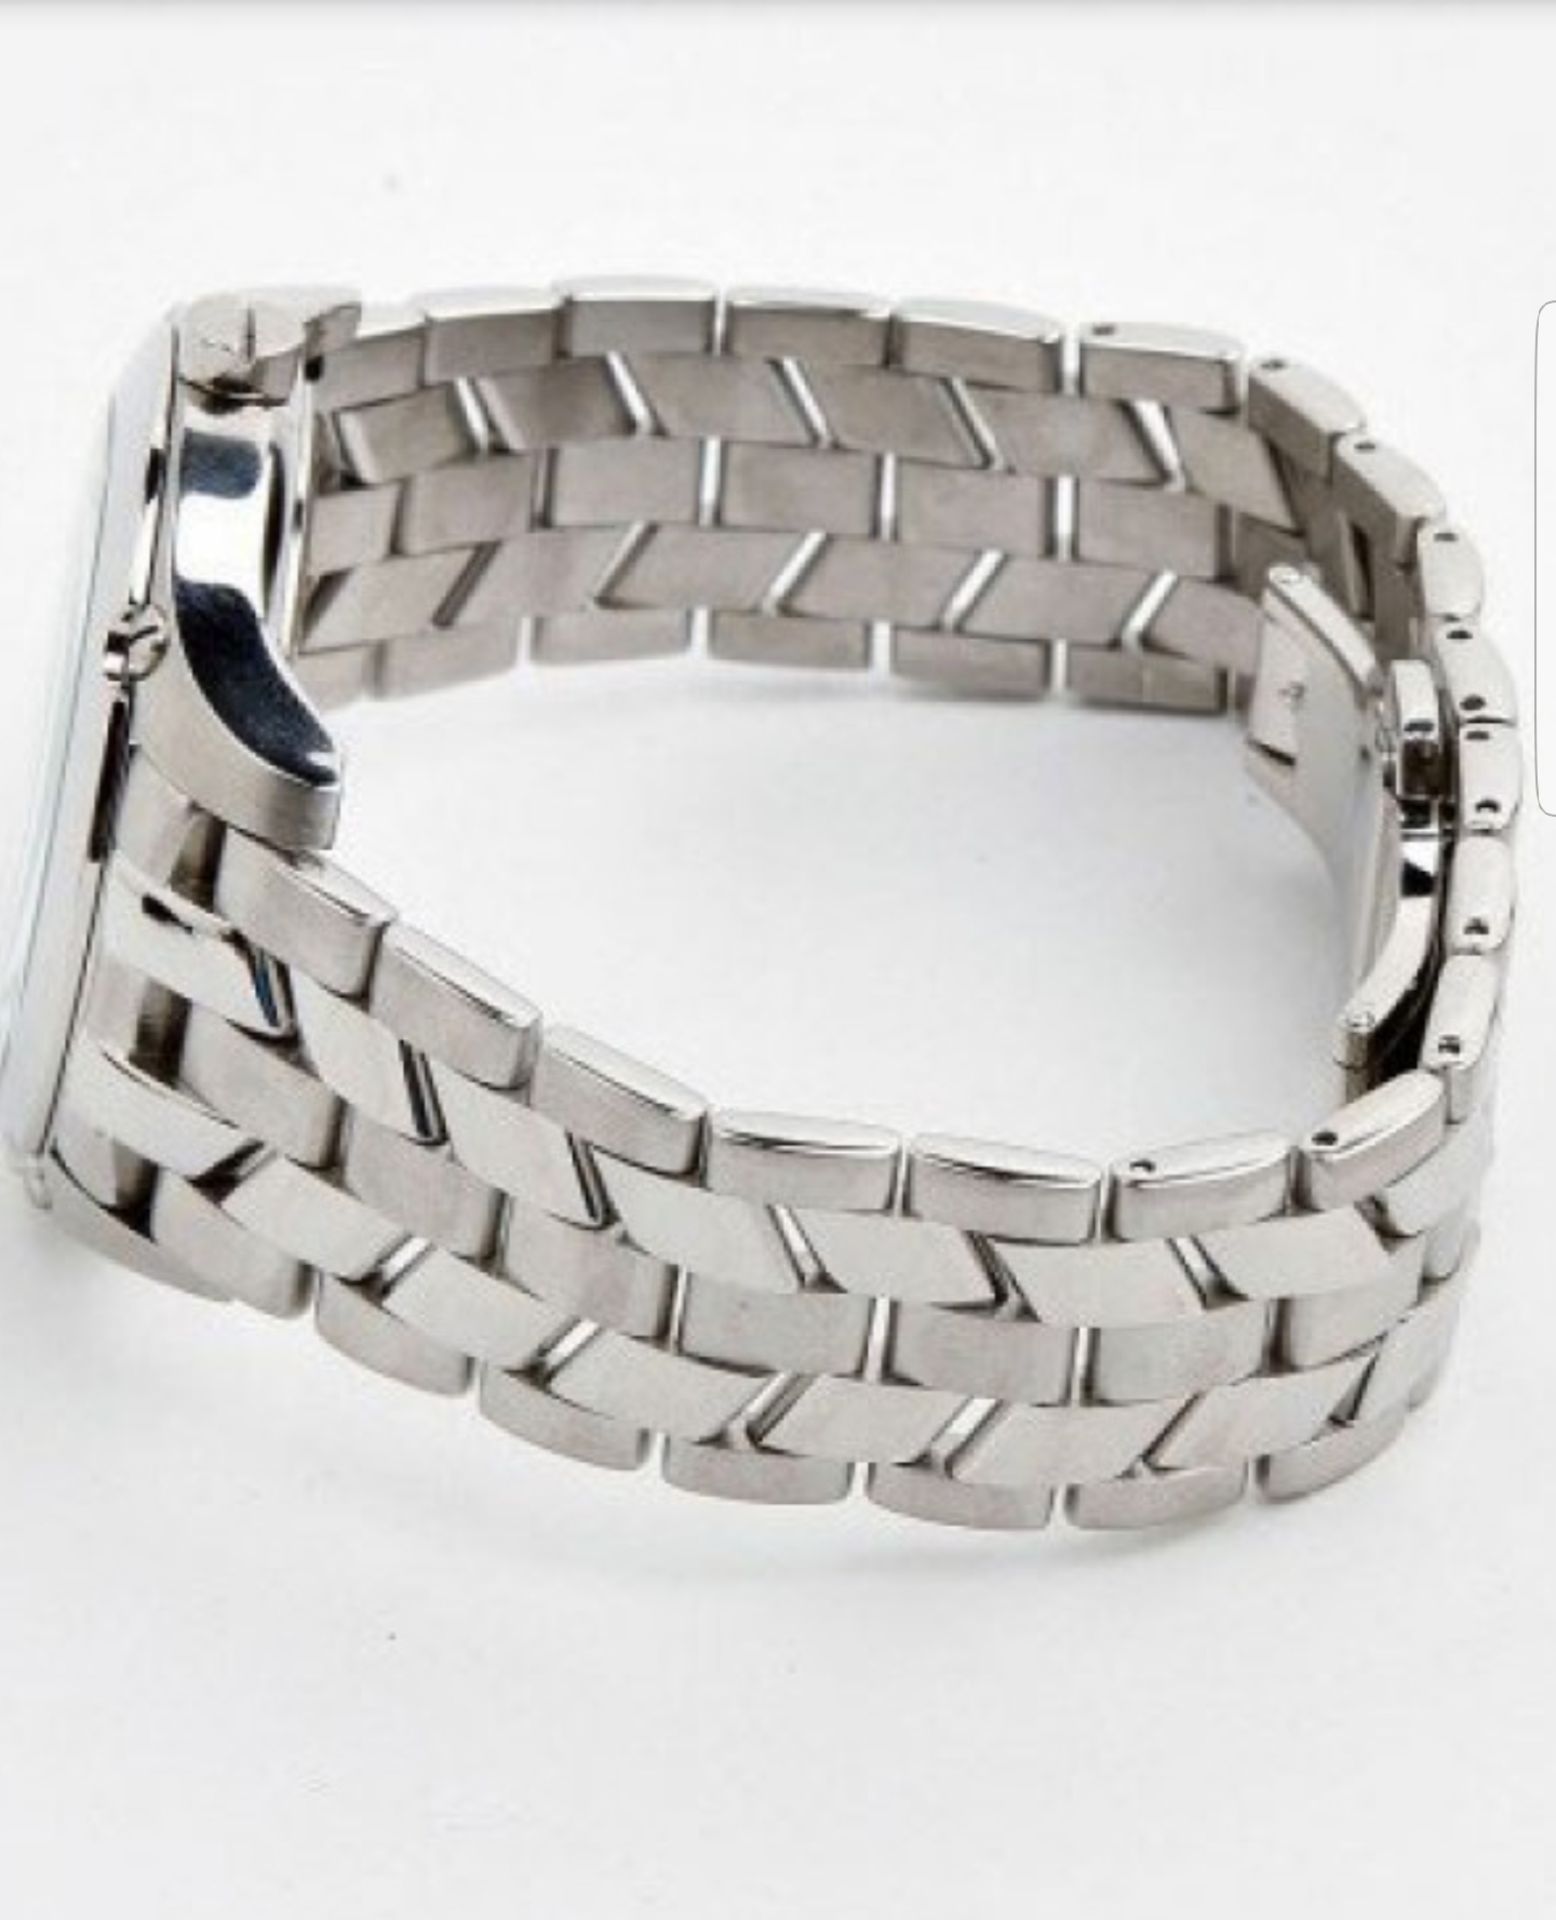 Burberry BU1852 Men's White Dial Stainless Steel Bracelet Wrist Watch - Image 5 of 6